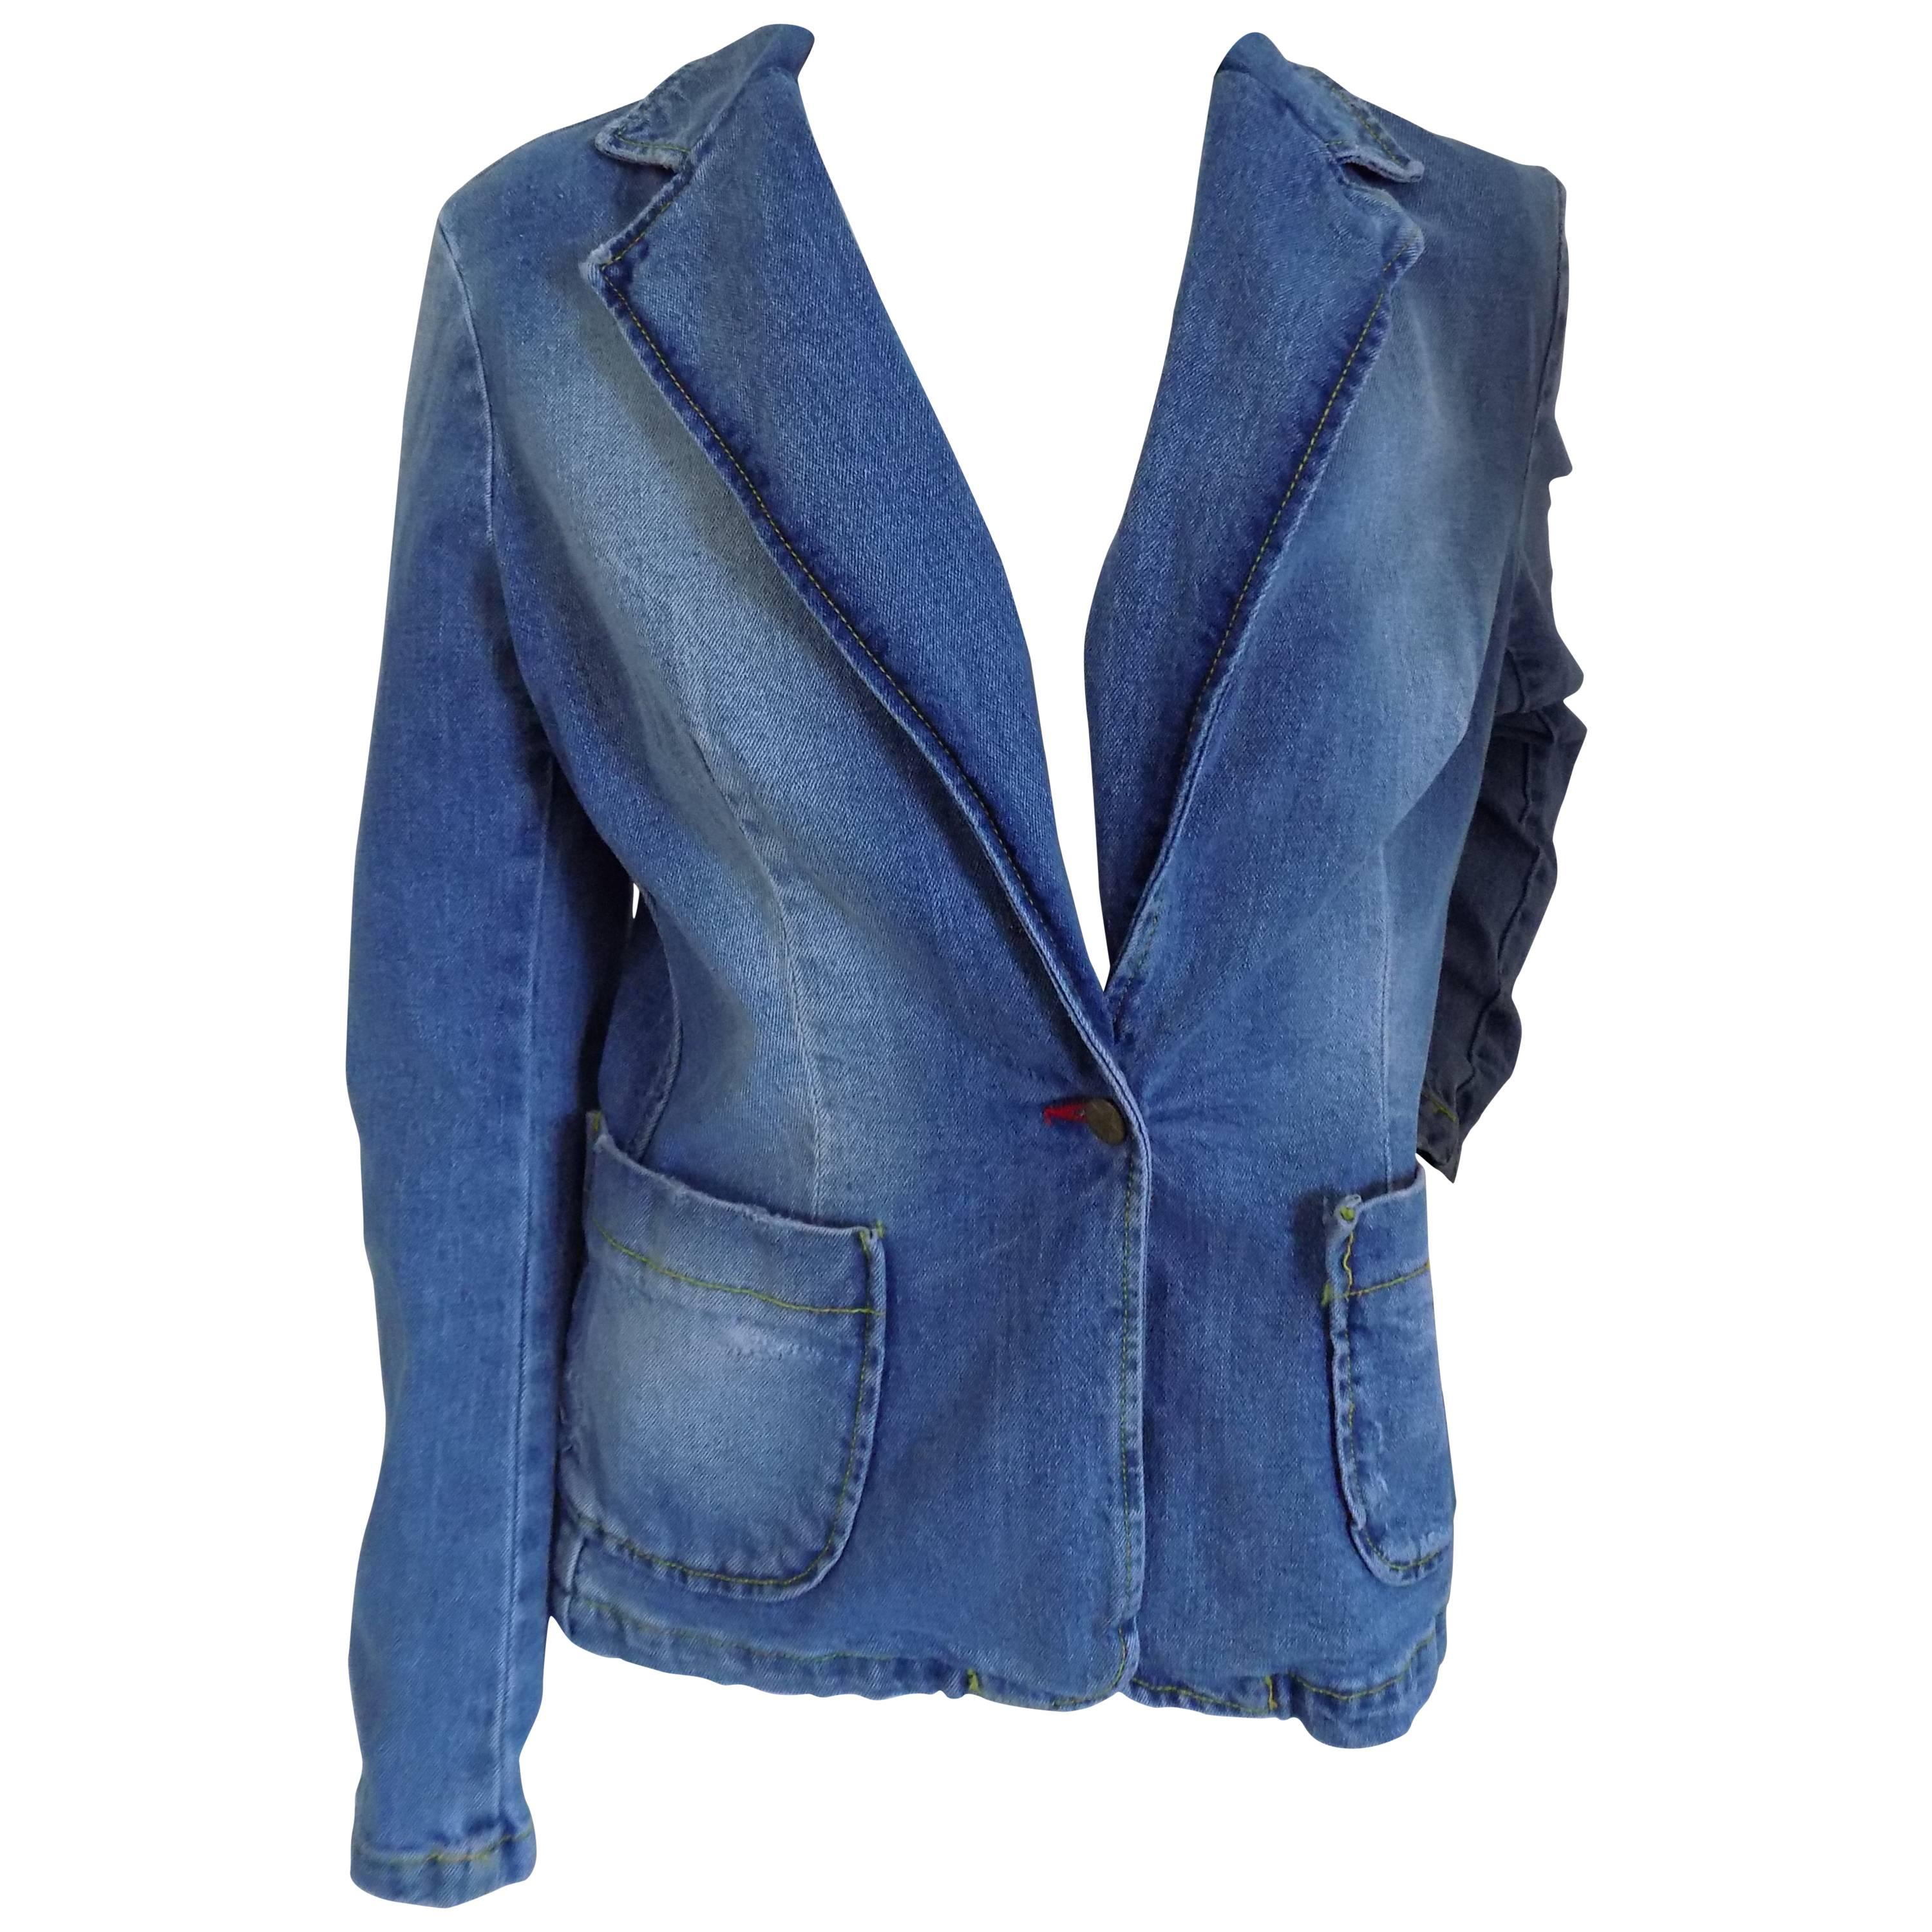 Jo Kang limited edition cotton denim jacket